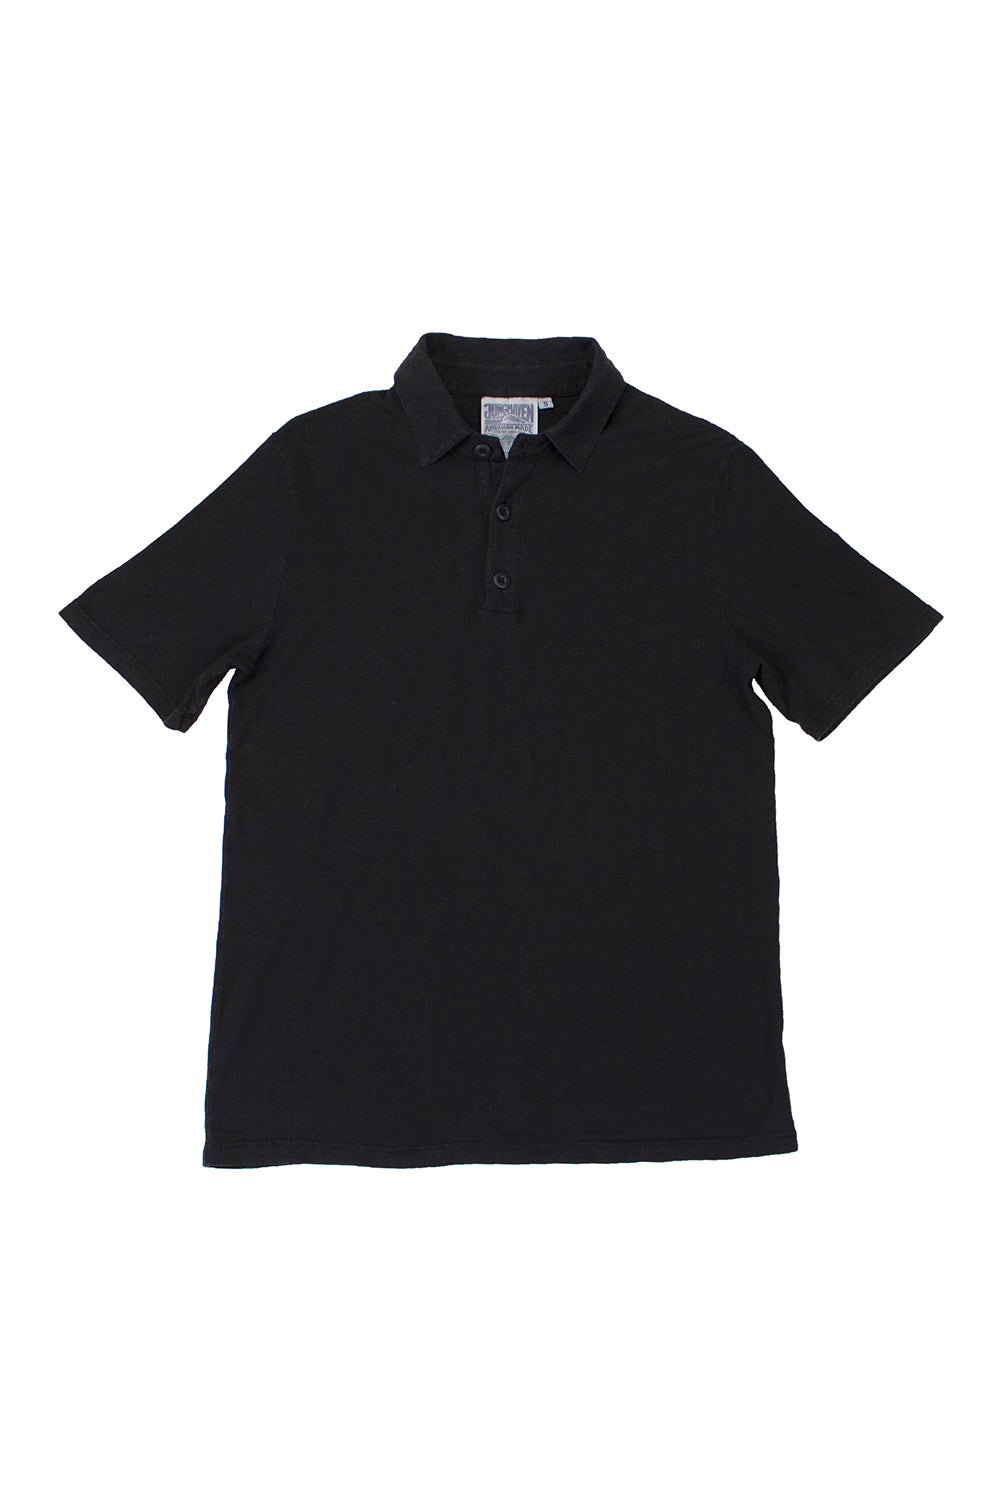 Camden Polo Shirt | Jungmaven Hemp Clothing & Accessories / Color: Black